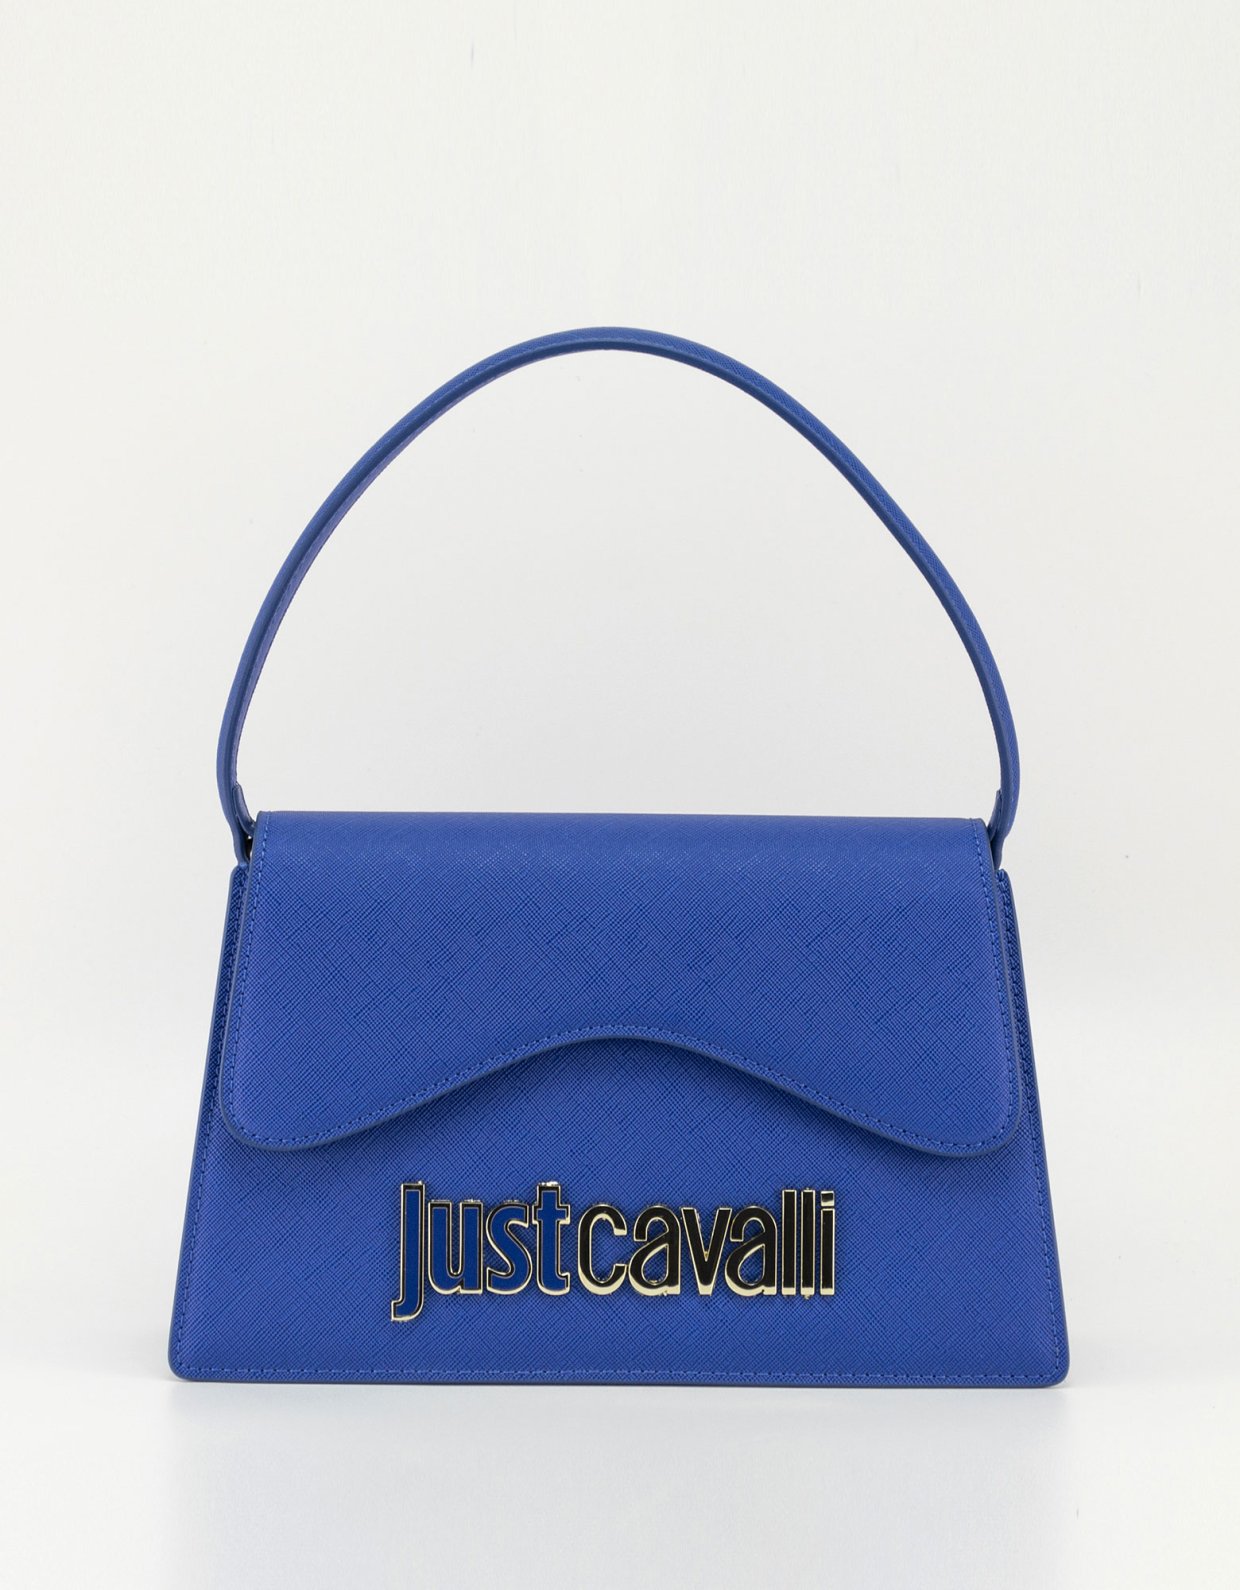 Just Cavalli Range metal lettering bag blue